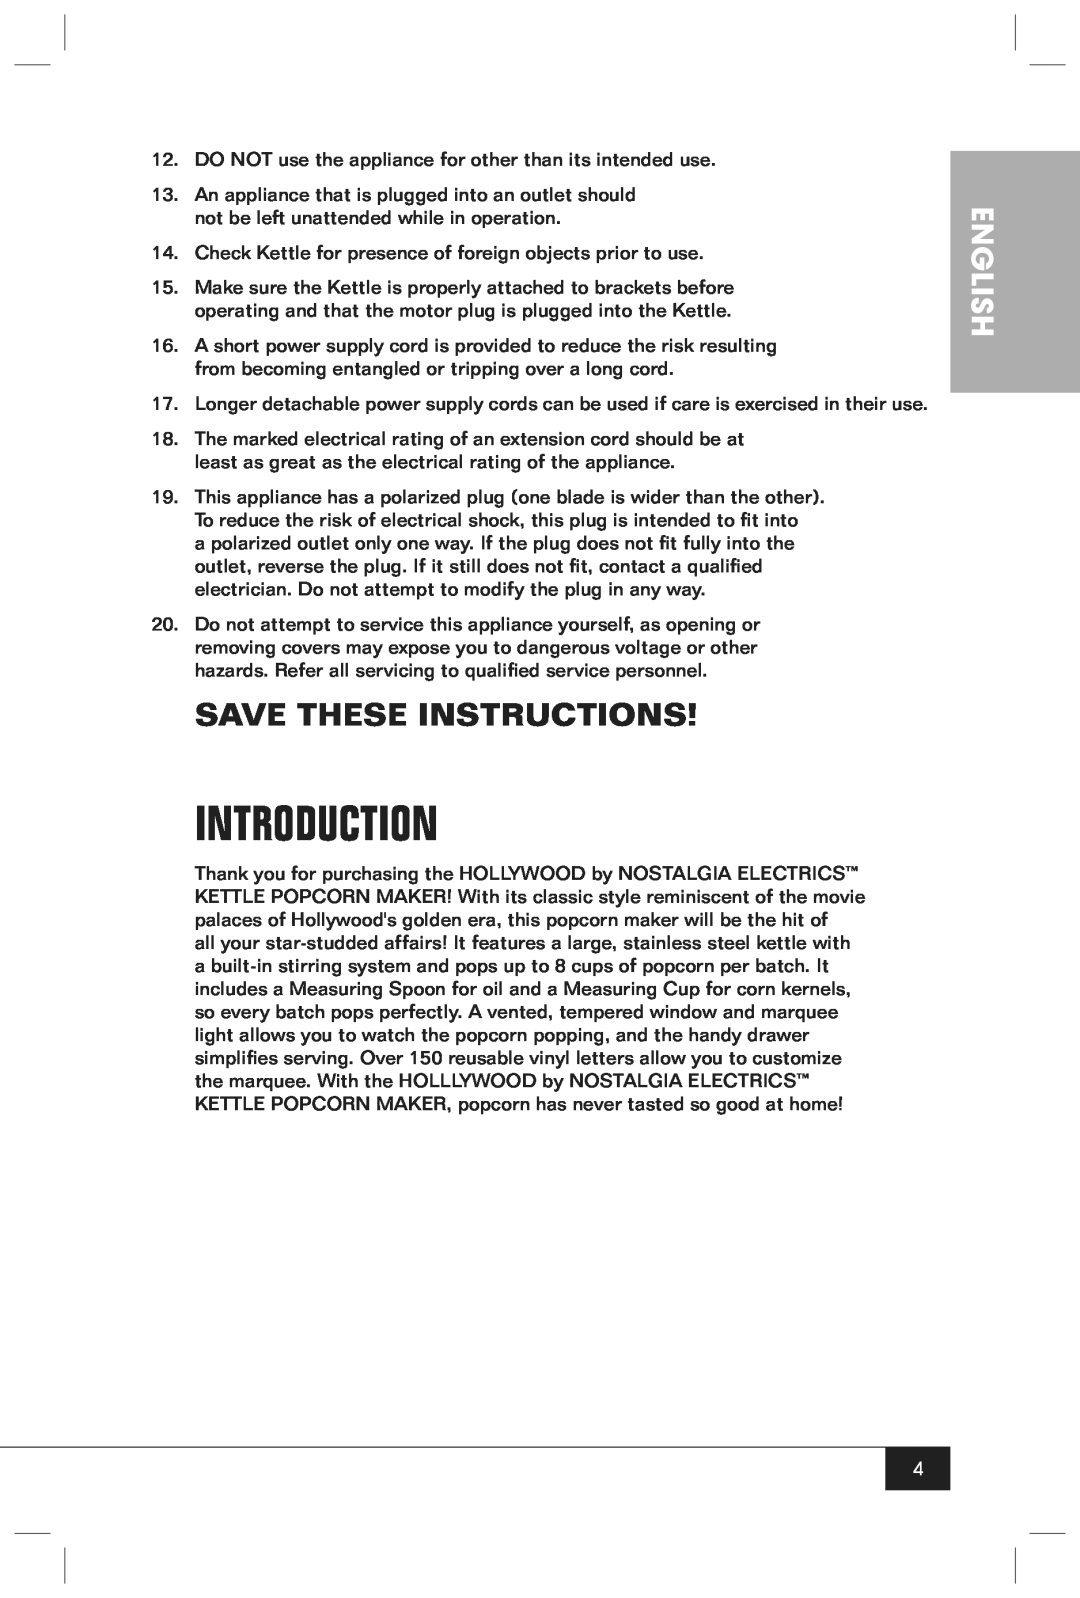 Nostalgia Electrics HKP200 manual Introduction, Save These Instructions, English 